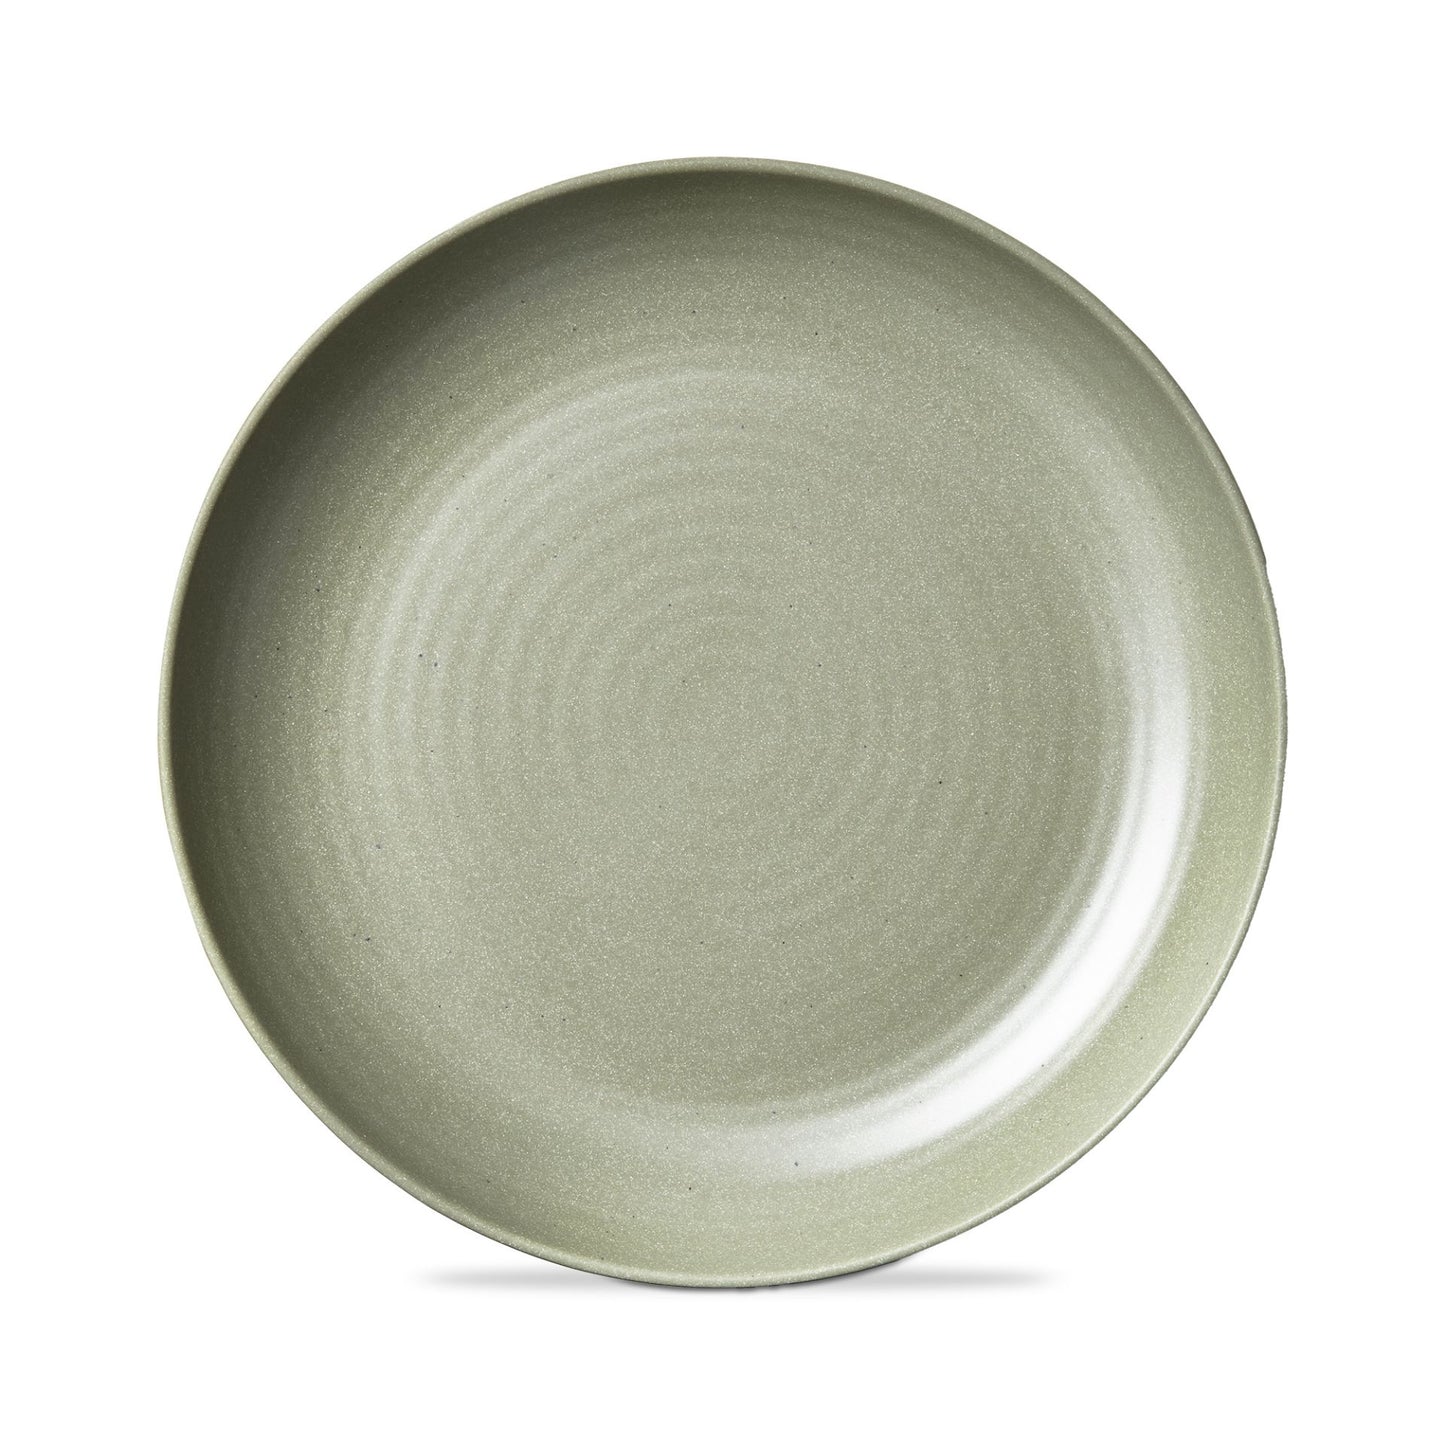 sage Brooklyn Melamine Dinner Plate on a white background.